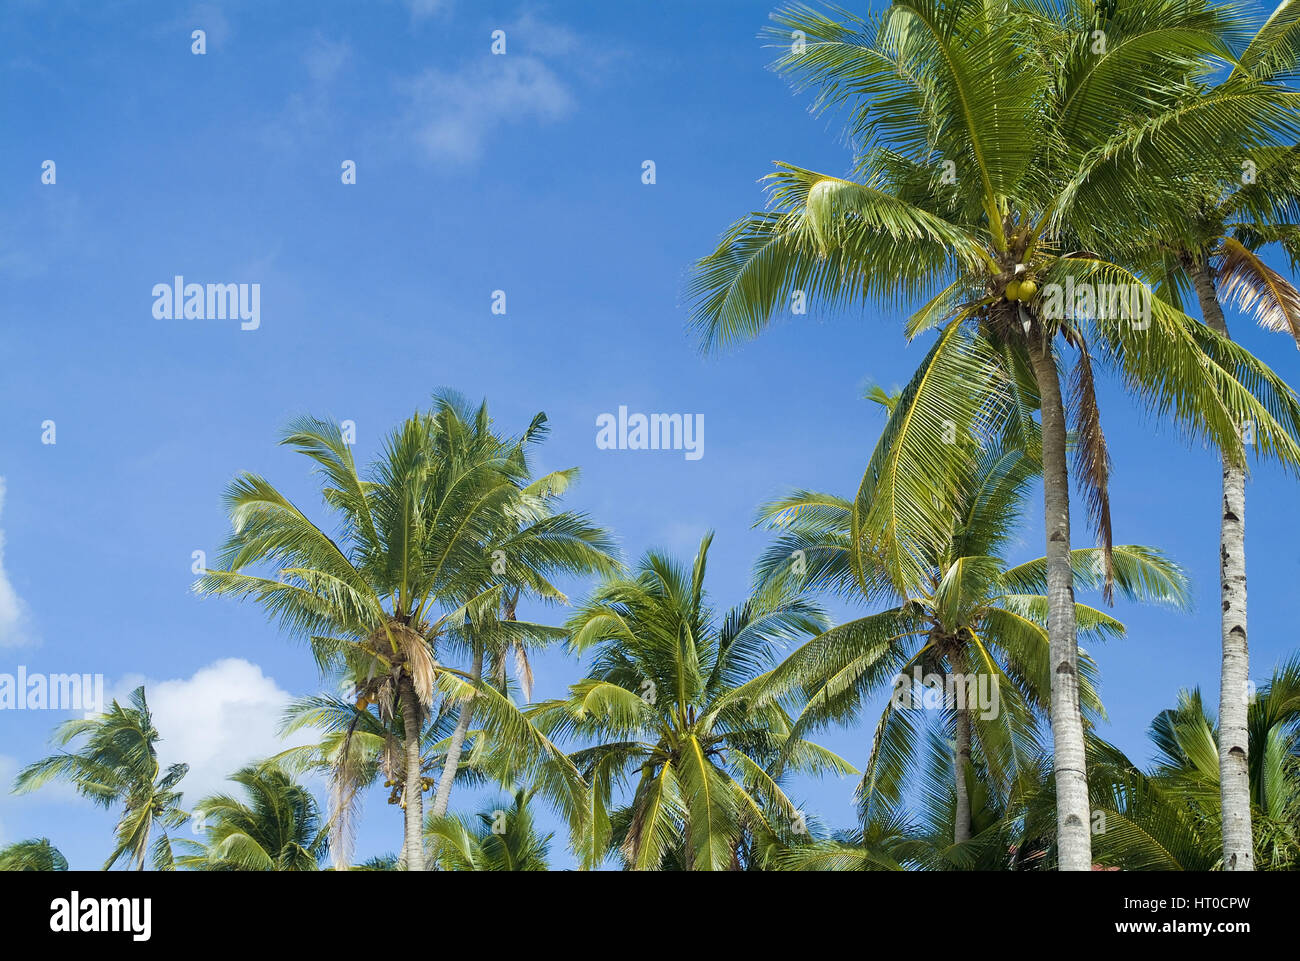 Palmen am Strand - palms on the beach Stock Photo - Alamy